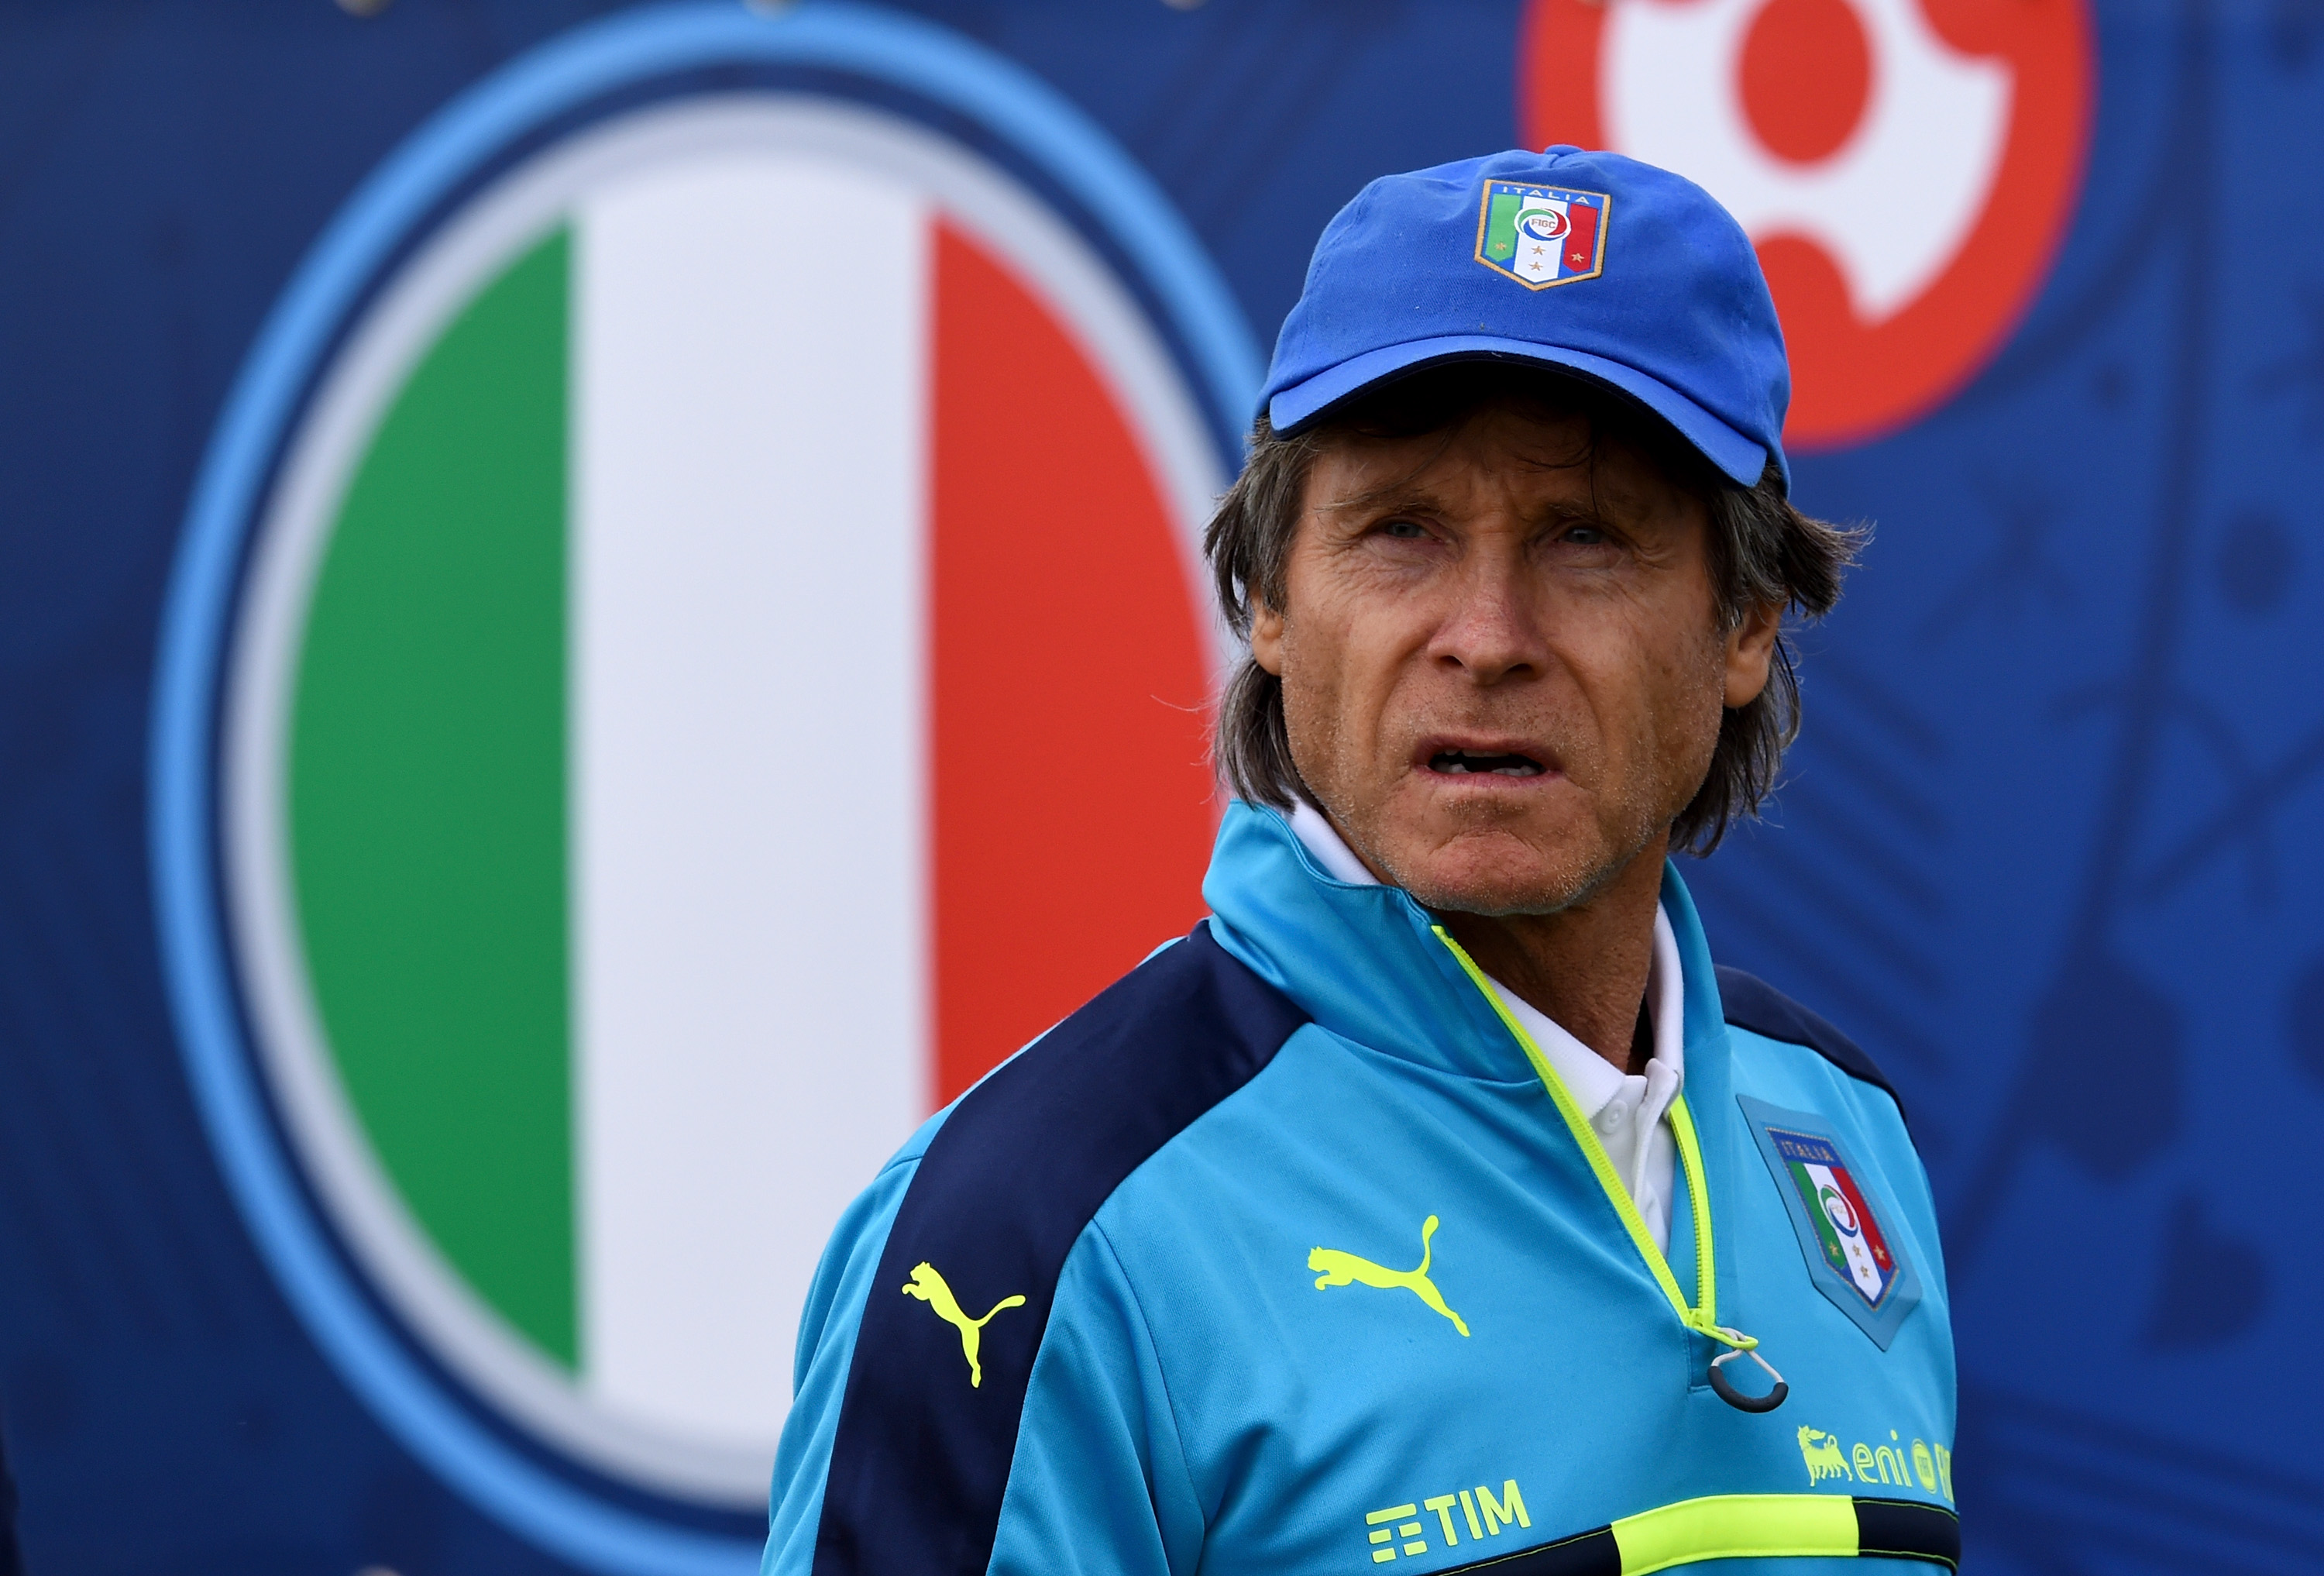 Inter & Italian FA At Work To Find Agreement Over Gabriele Oriali, Italian Media Report